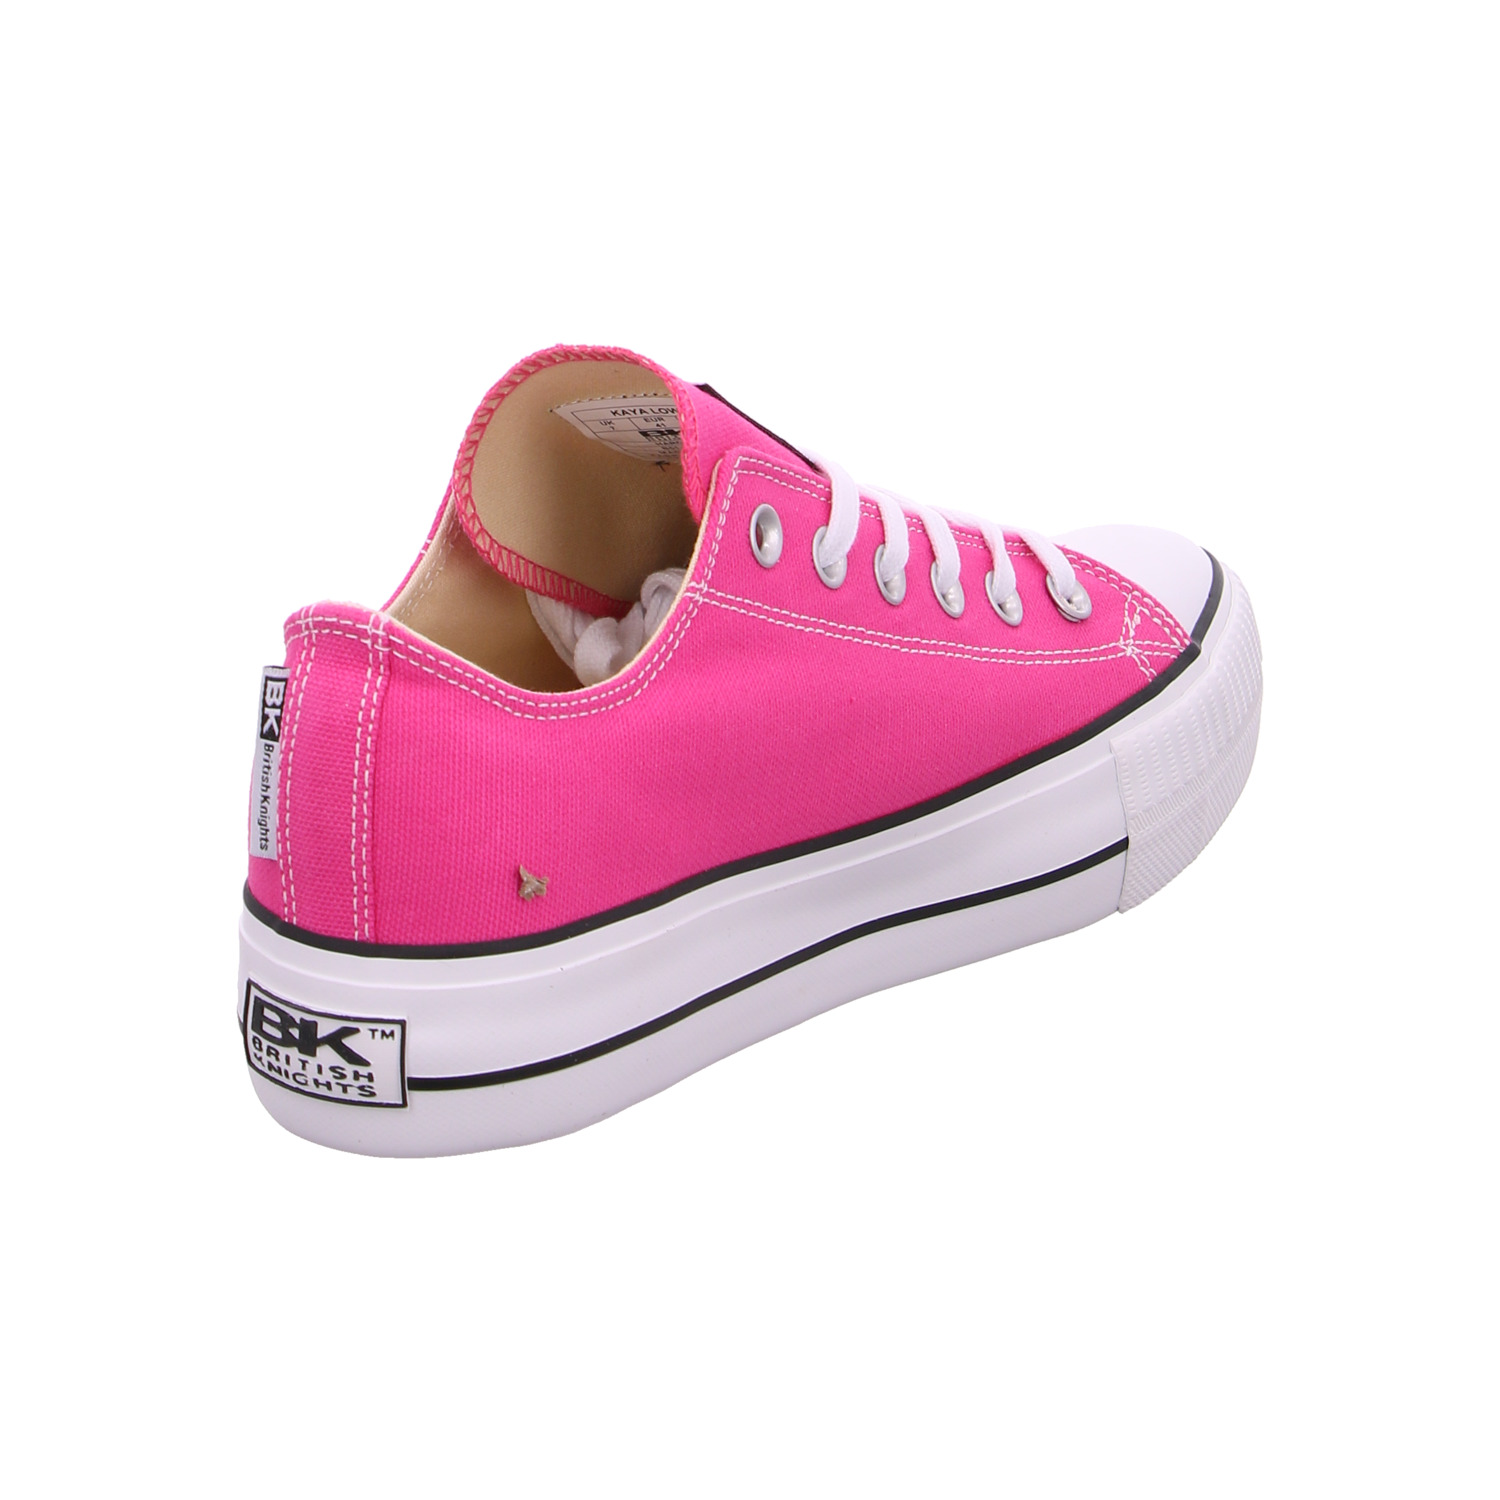 british-knights-sneaker-rosa-119551-36